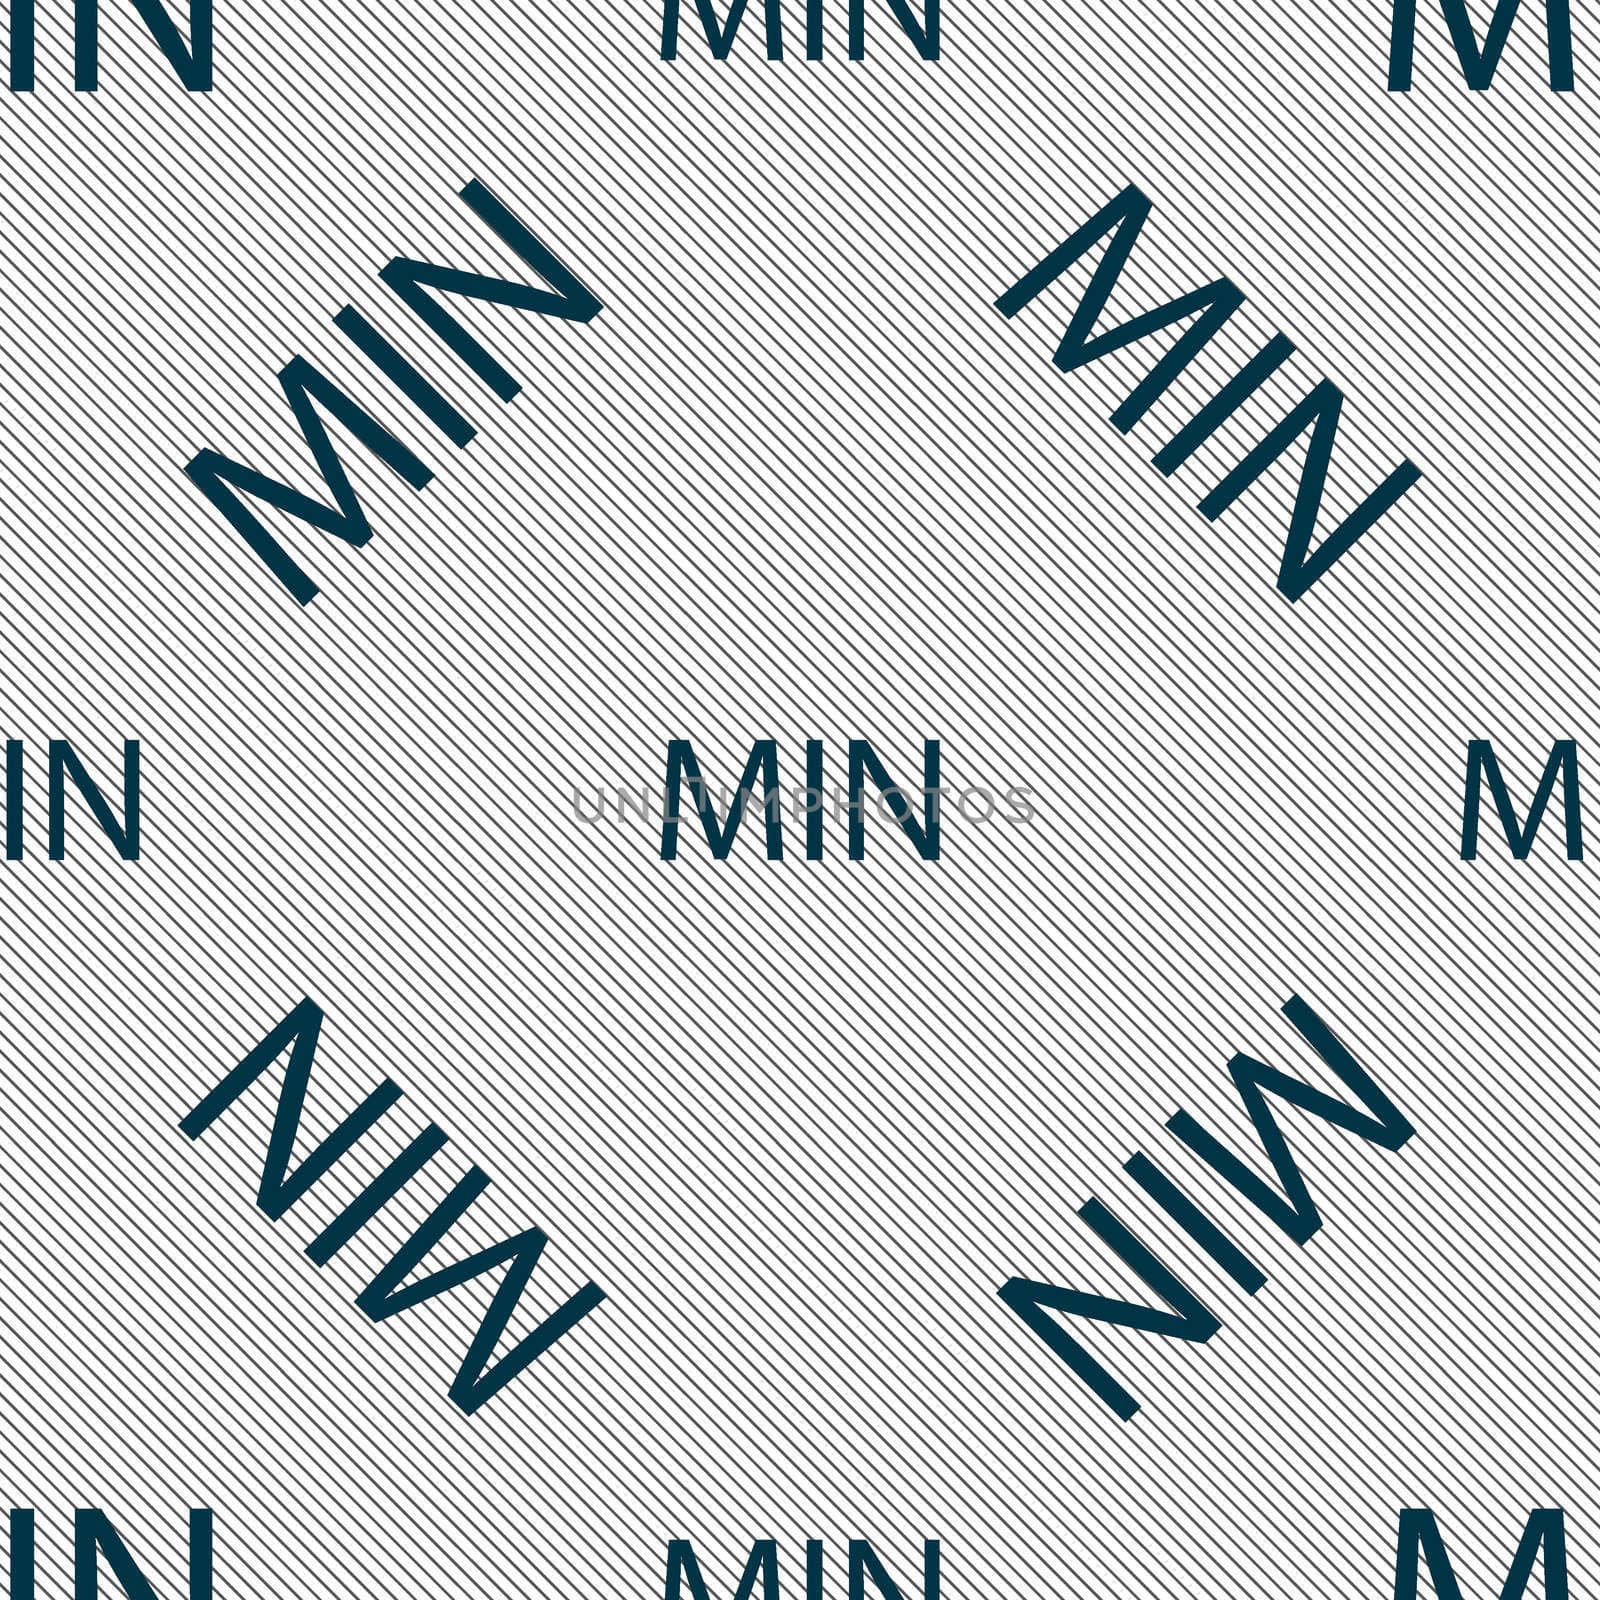 minimum sign icon. Seamless pattern with geometric texture. illustration